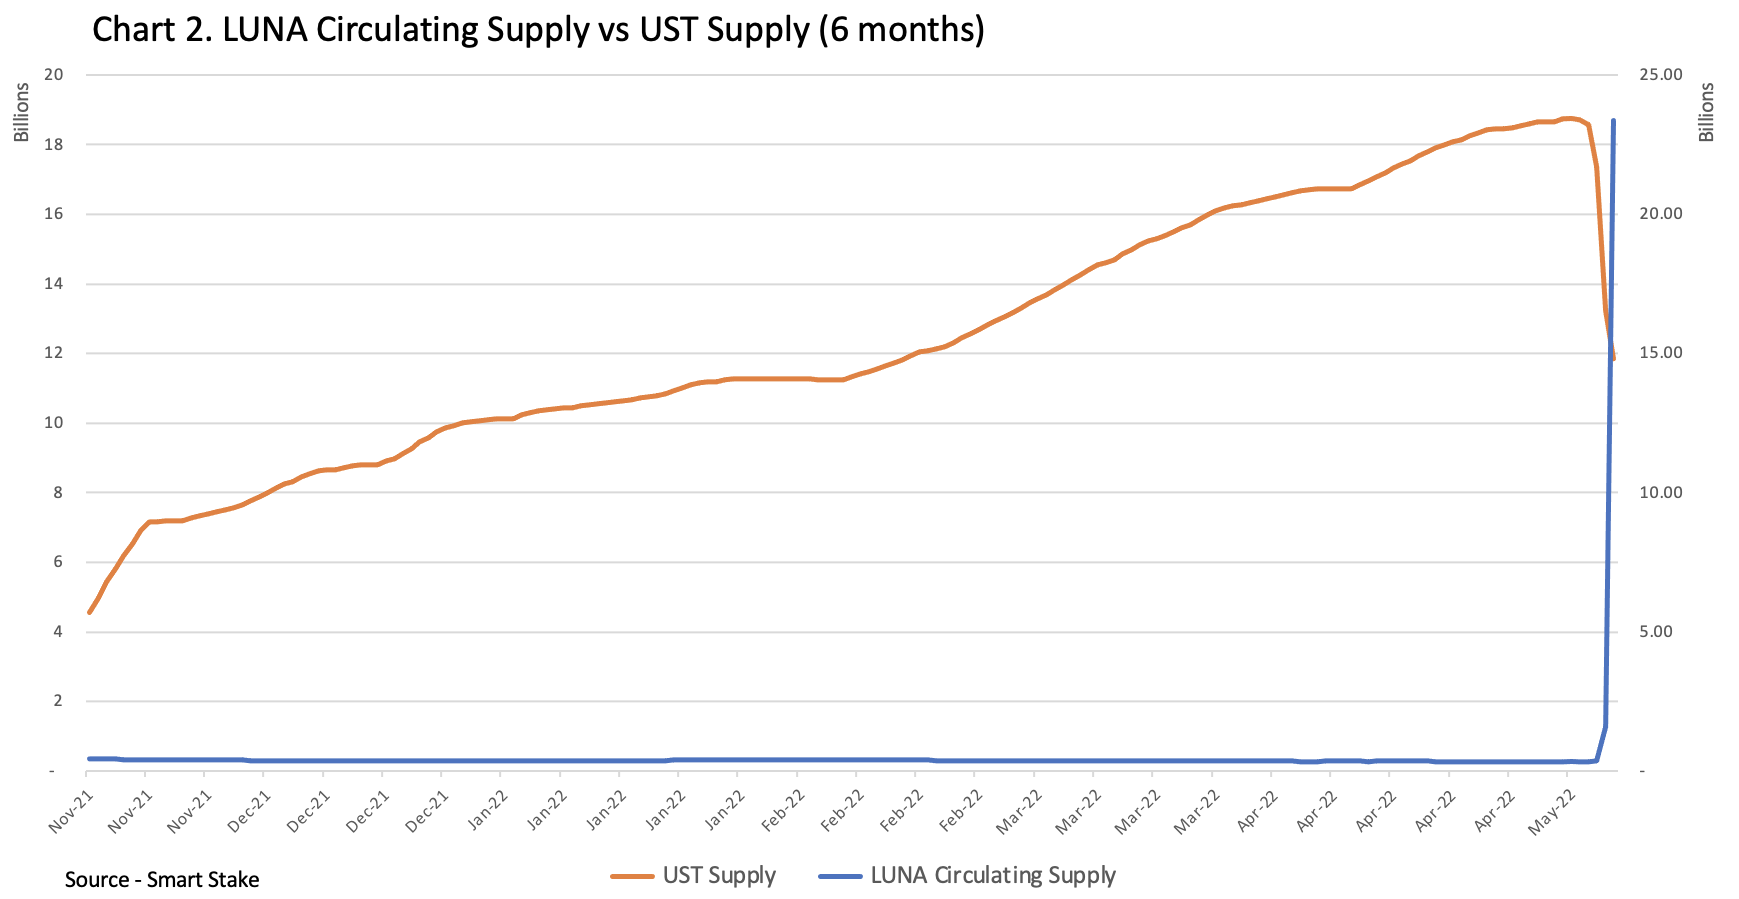 LUNA Circulating Supply vs UST Supply (6 months)